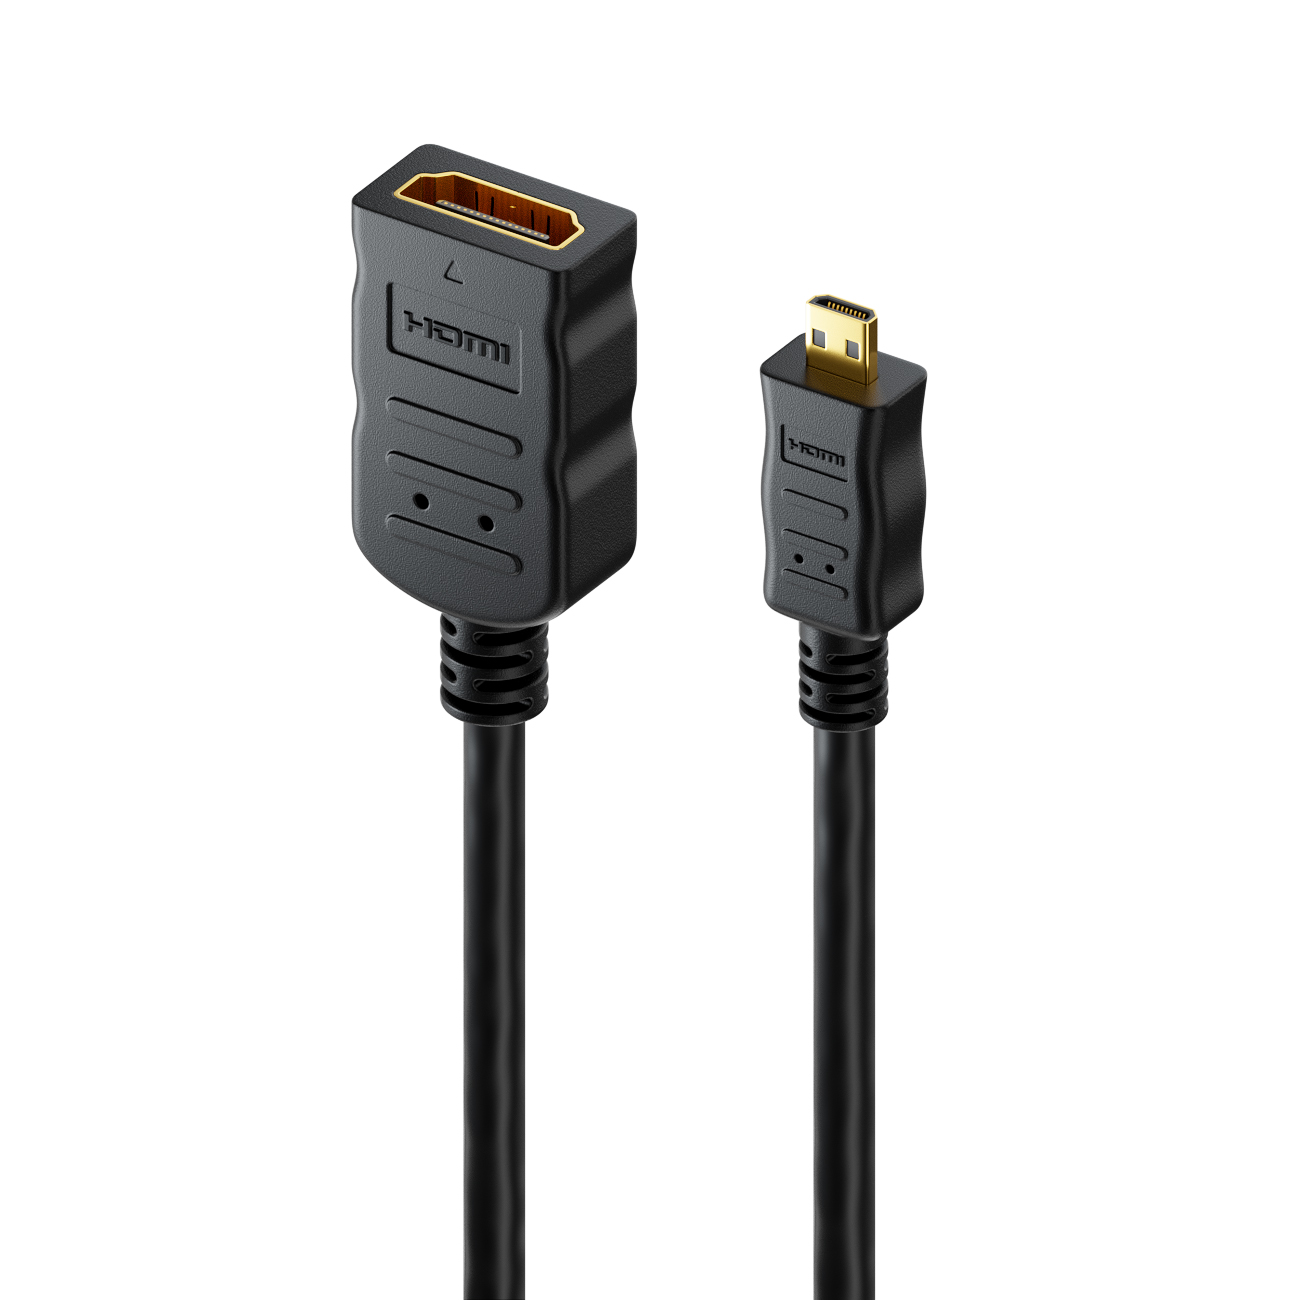 Audio Rückkanal mumbi MICRO HDMI auf HDMI Adapter Adapter mit Ethernet zertifiziert HDMI Buchse vergoldet 19pol auf mikro HDMI Stecker 